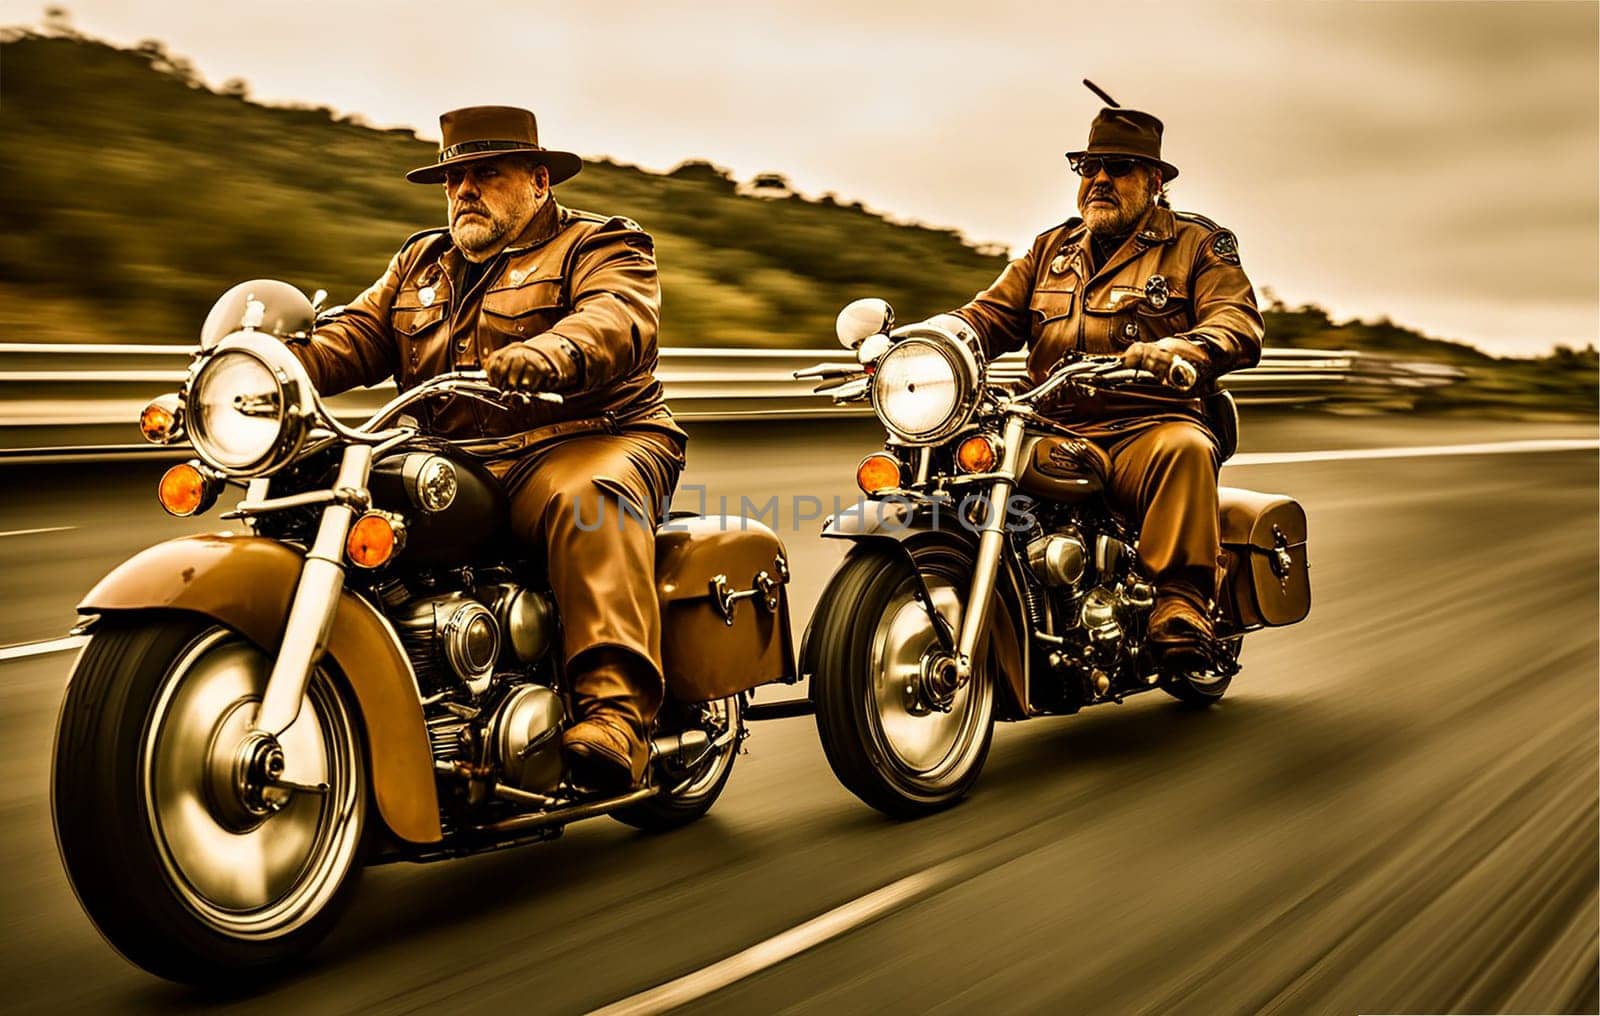 fantasy comics veteran chips police patrol on motorbikes riding steampunk bikes funny postcards by verbano